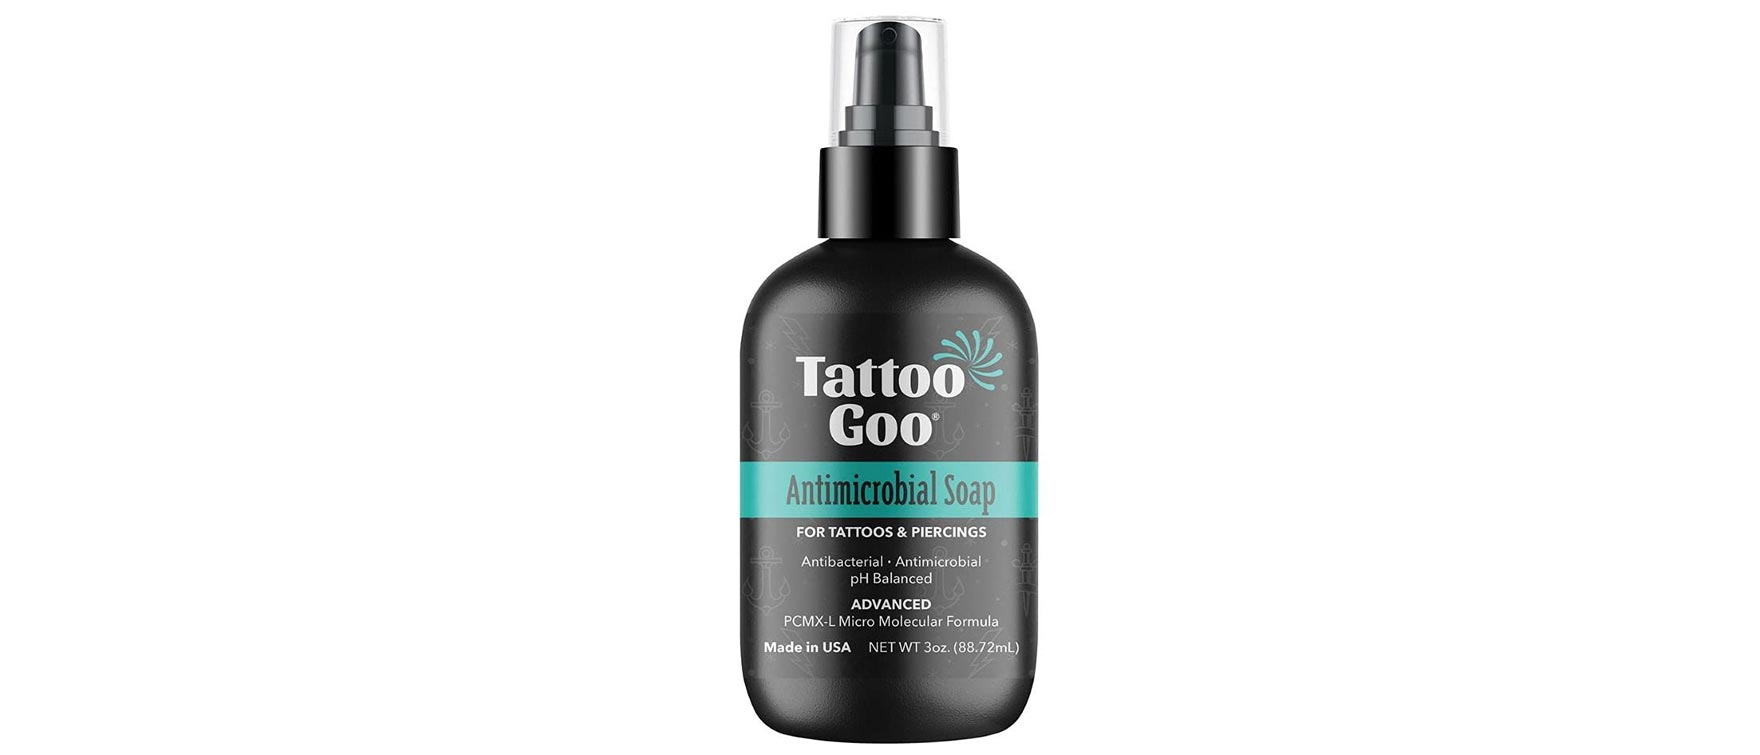 4. Tattoo Goo Deep Cleansing Soap